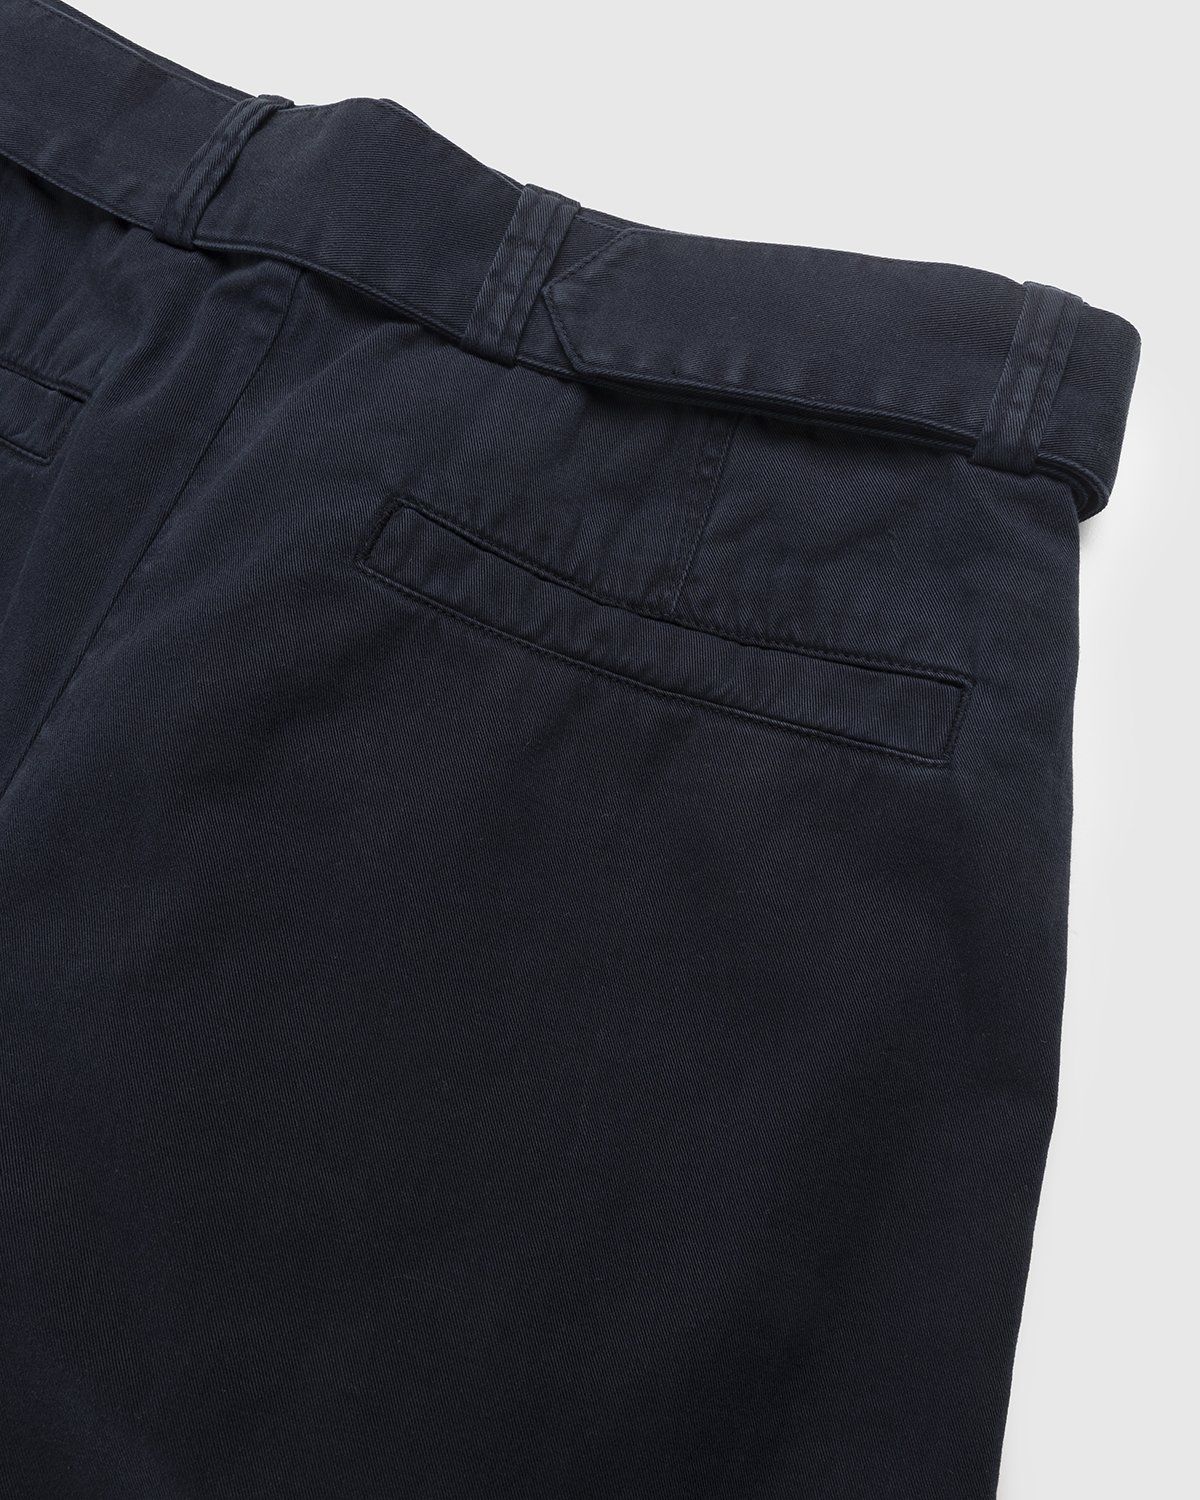 Dries van Noten – Penson Pants Navy - Pants - Blue - Image 3